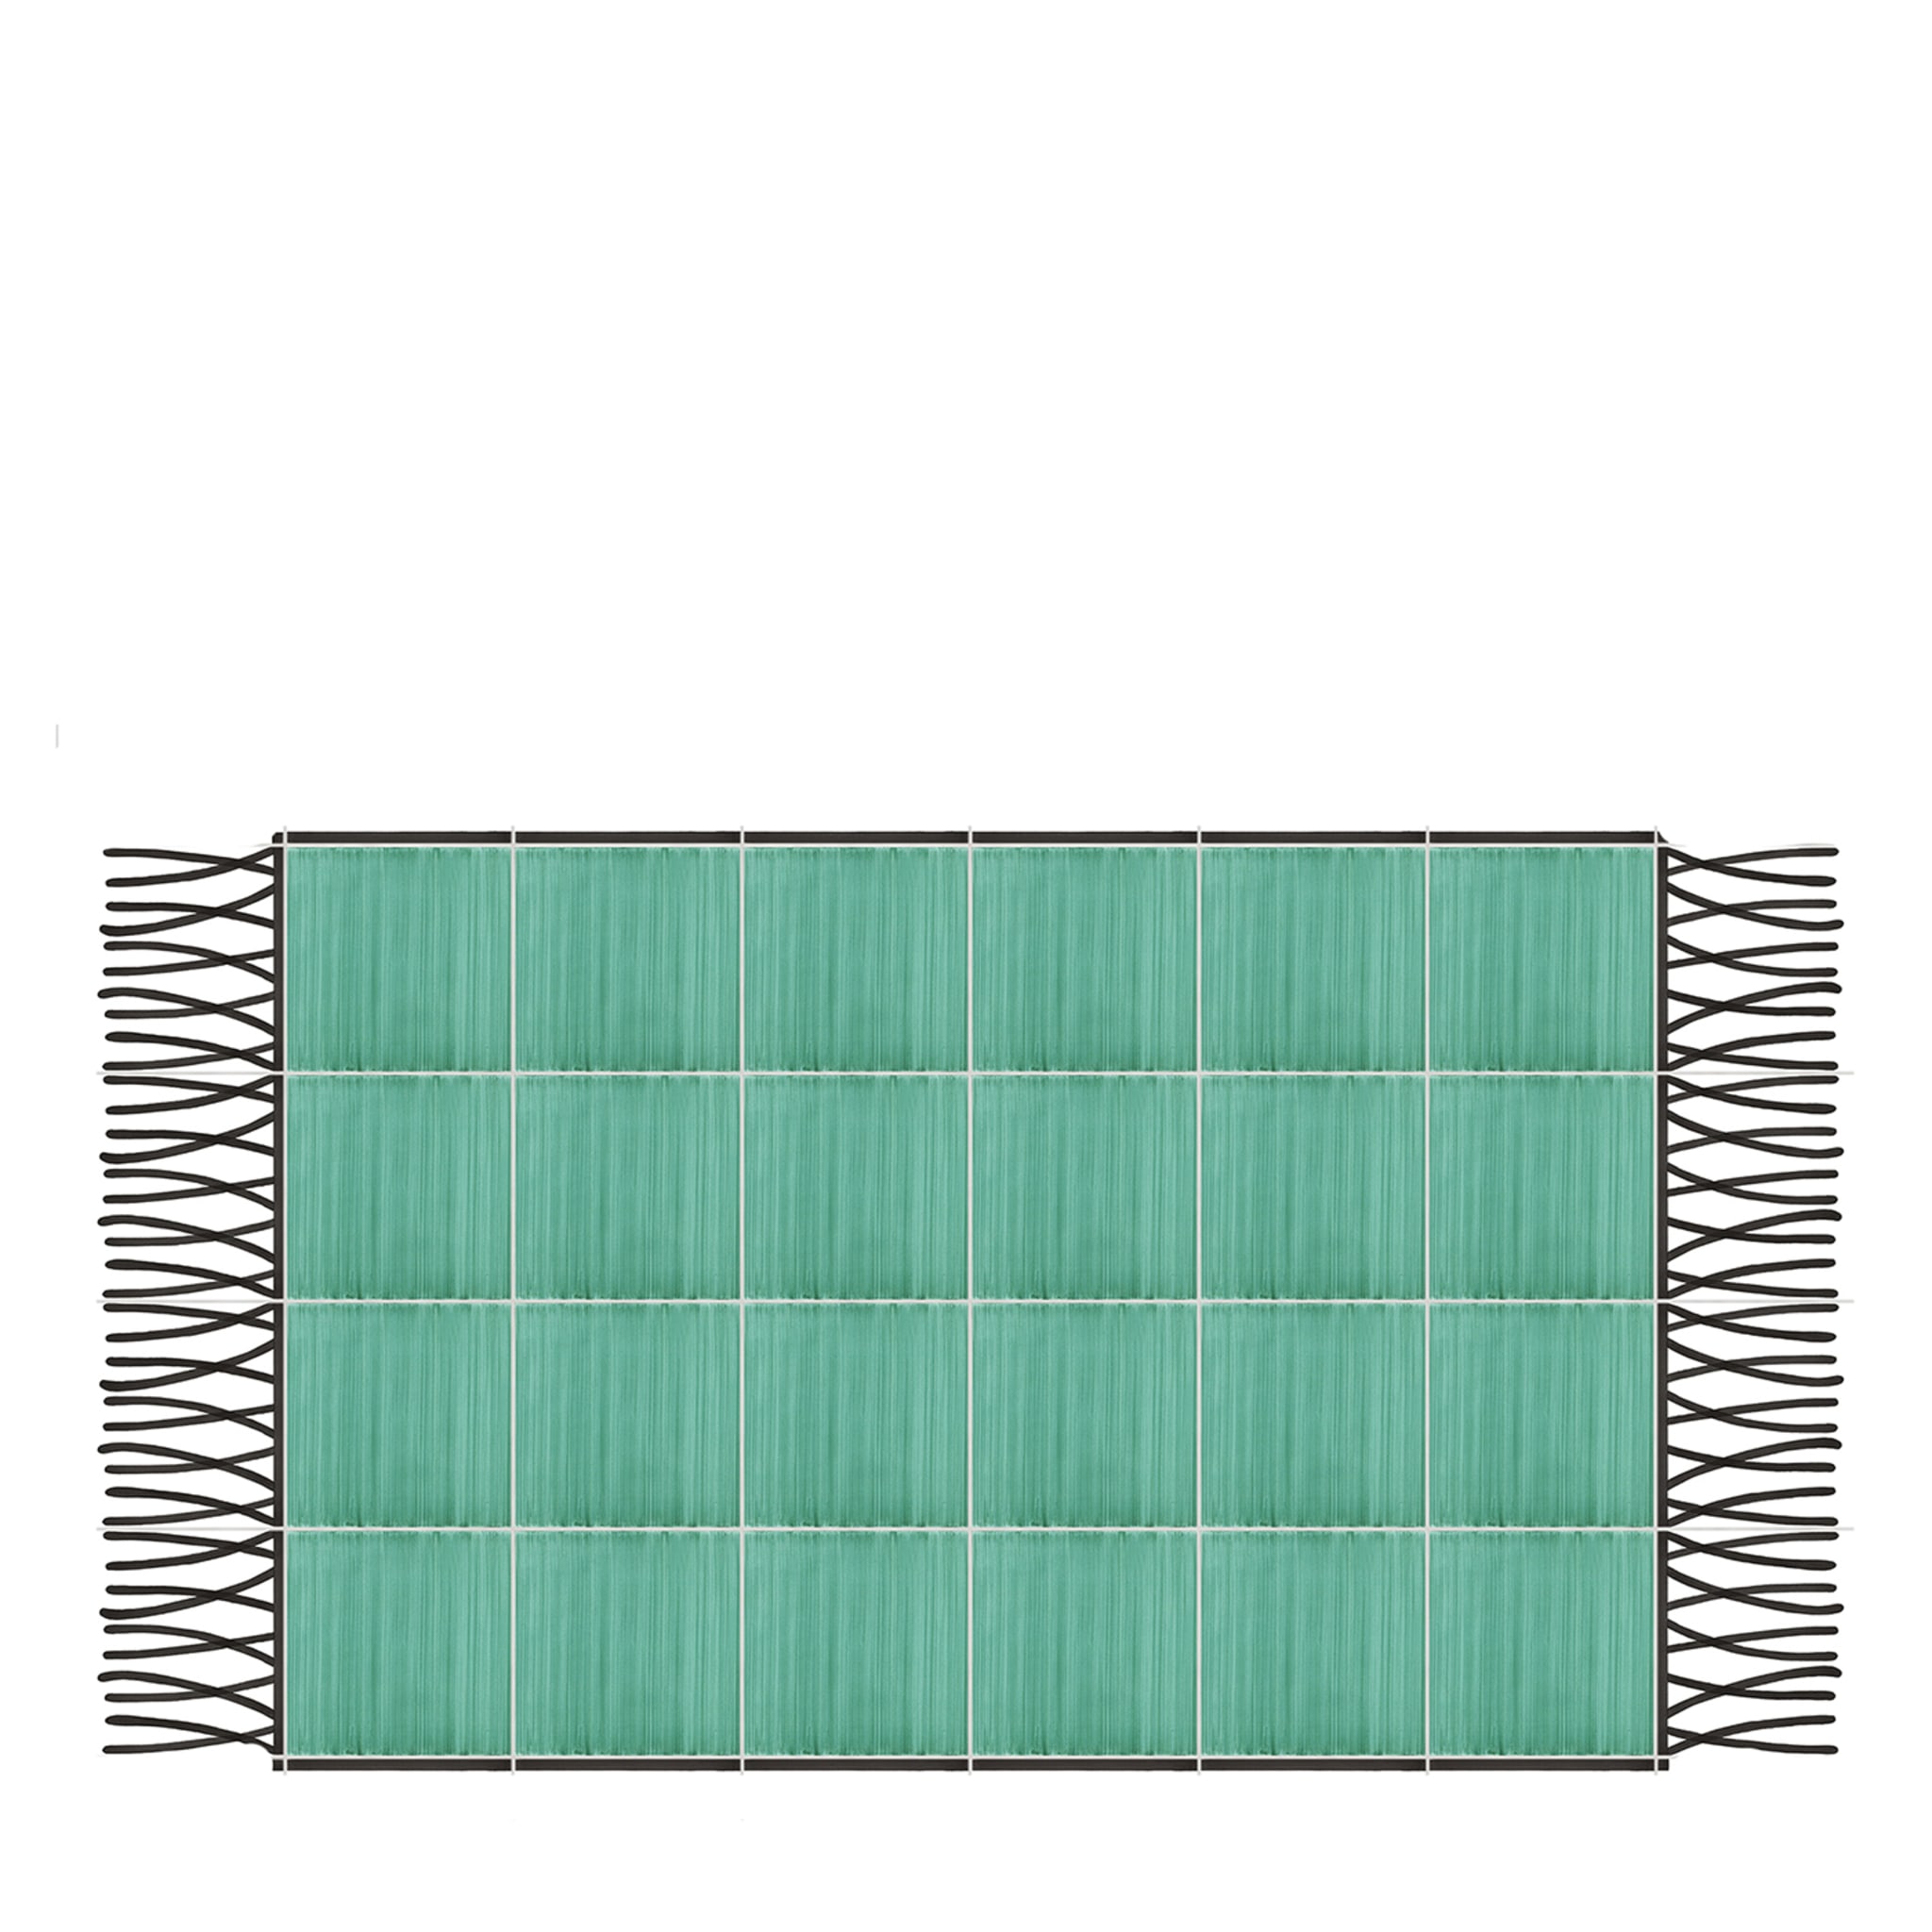 Teppich Total Grün Keramische Komposition von Giuliano Andrea dell'Uva 160 x 120 - Hauptansicht